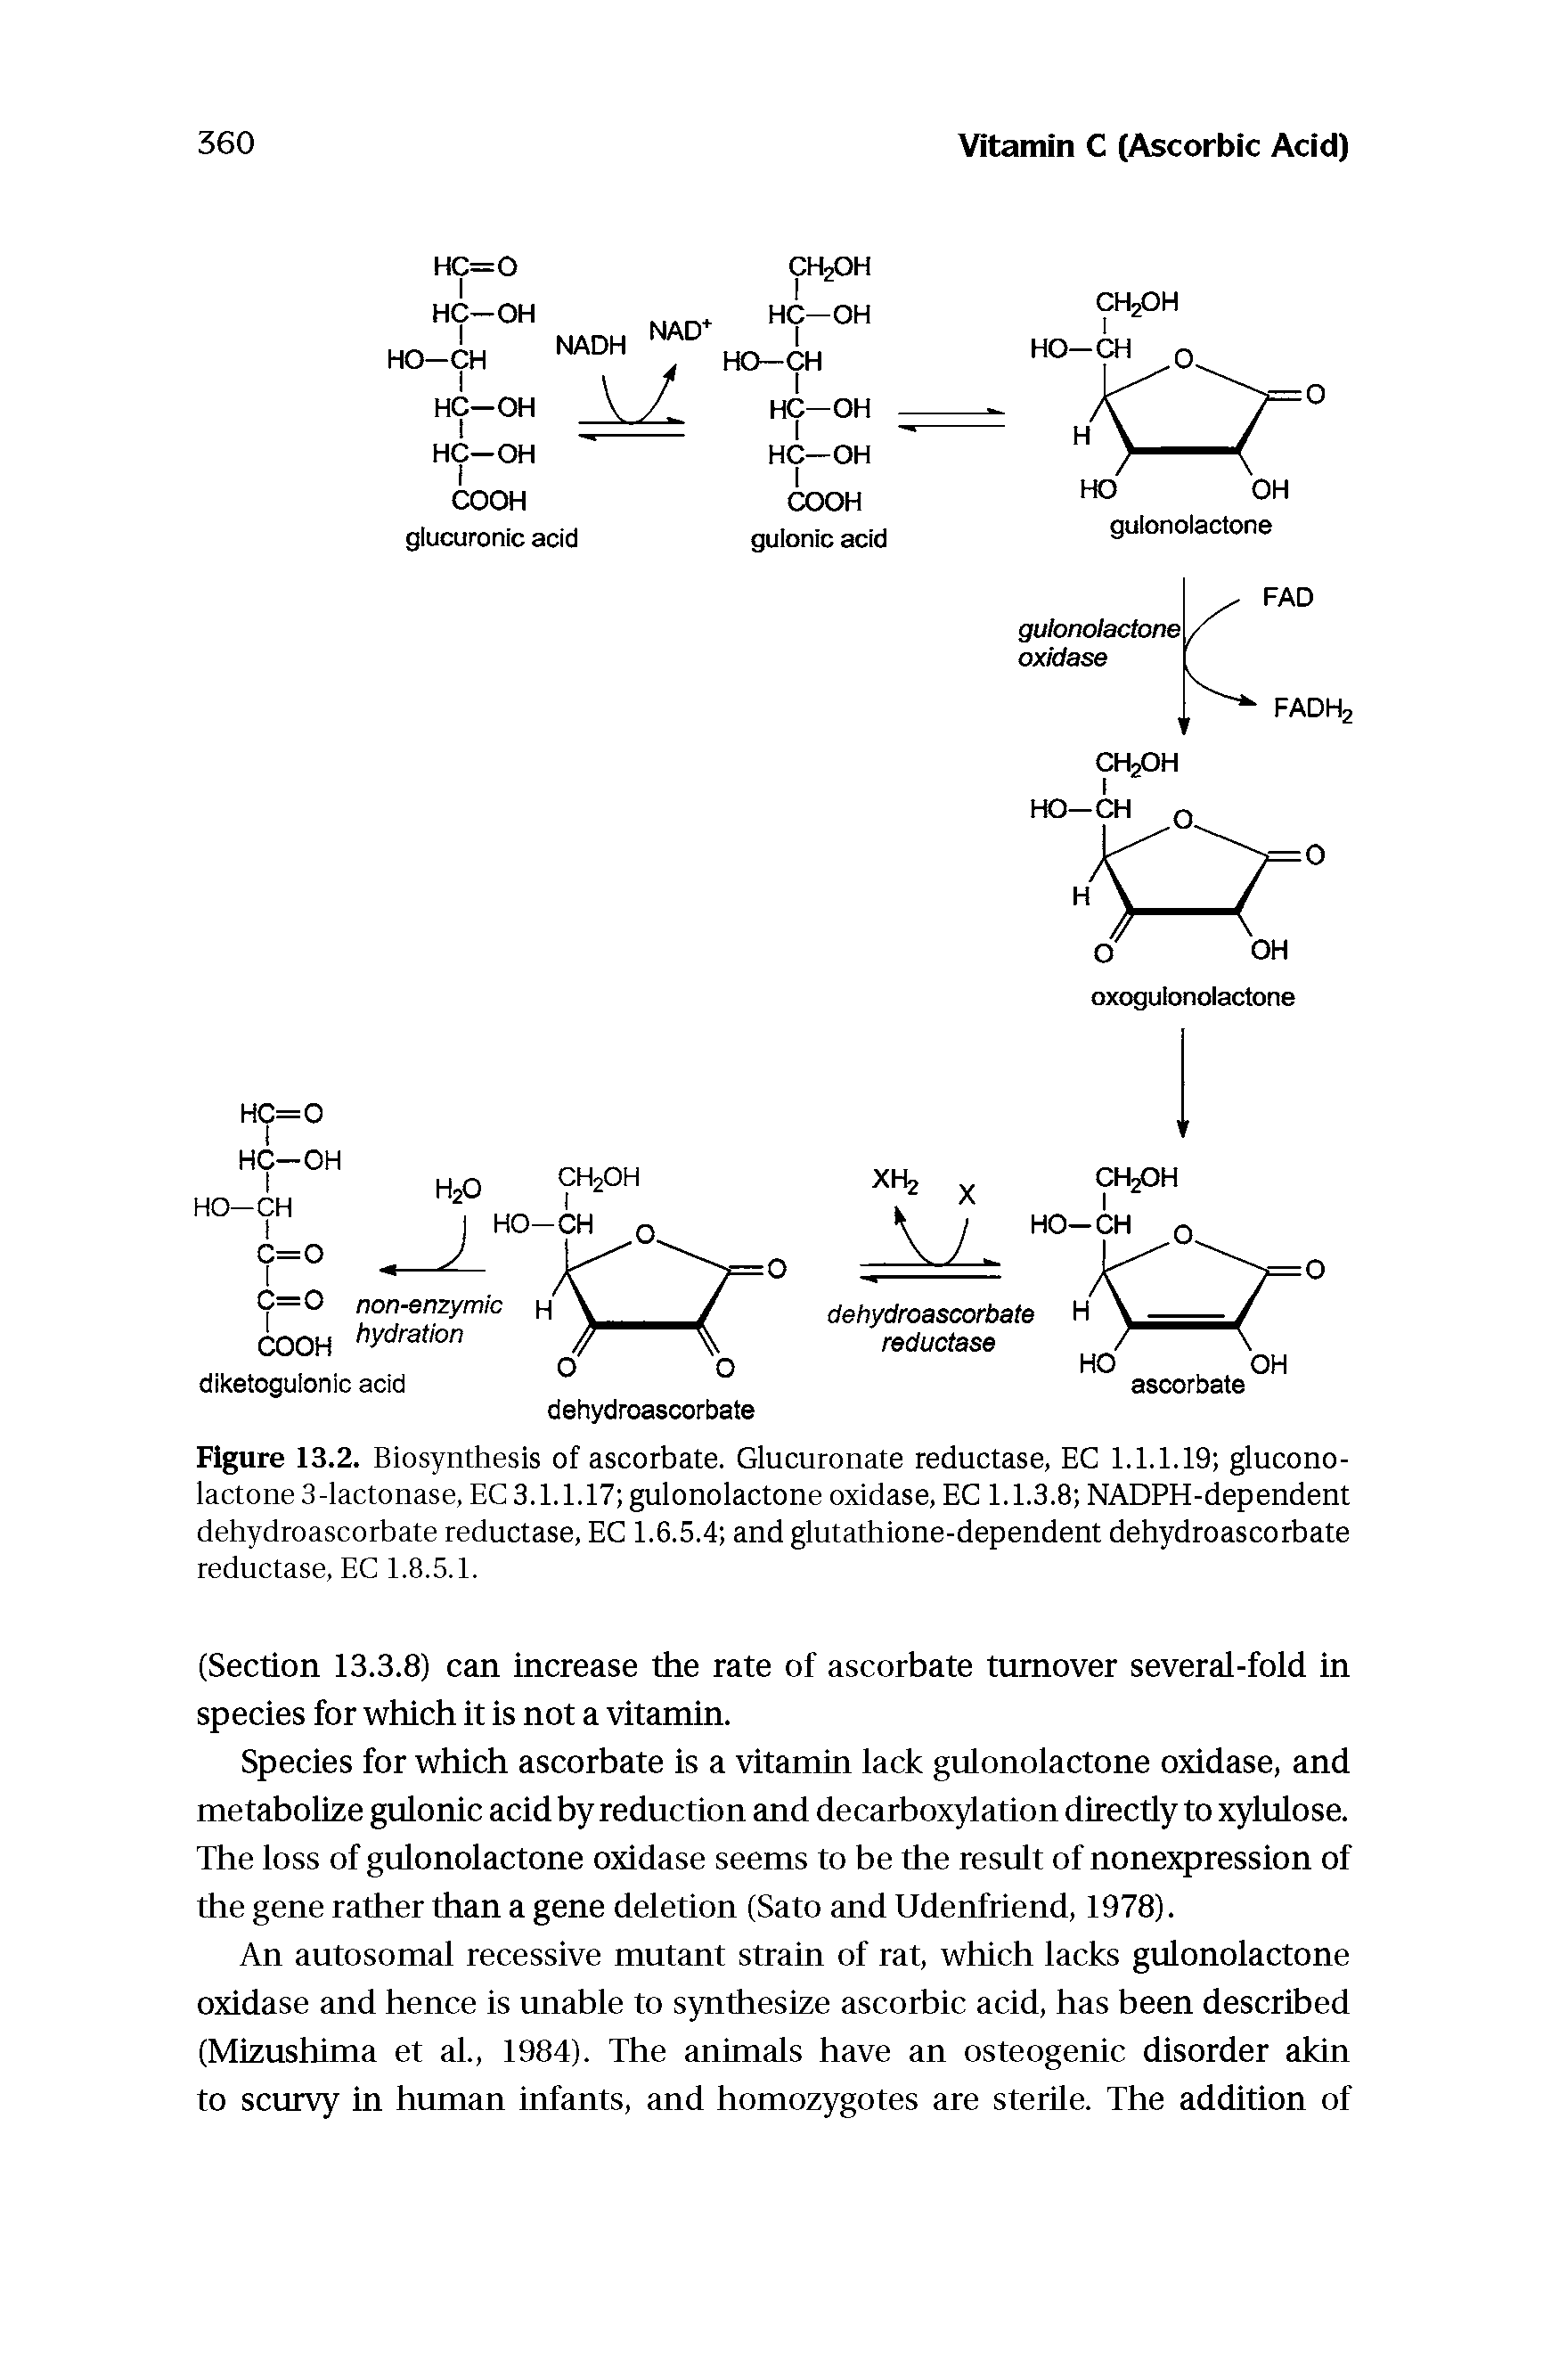 Figure 13.2. Biosynthesis of ascorbate. Glucuronate reductase, EC 1.1.1.19 glucono-lactone3-lactonase, EC 3.1.1.17 gulonolactone oxidase, EC 1.1.3.8 NADPH-dependent dehydroascorbate reductase, EC 1.6.5.4 and glutathione-dependent dehydroascorbate...